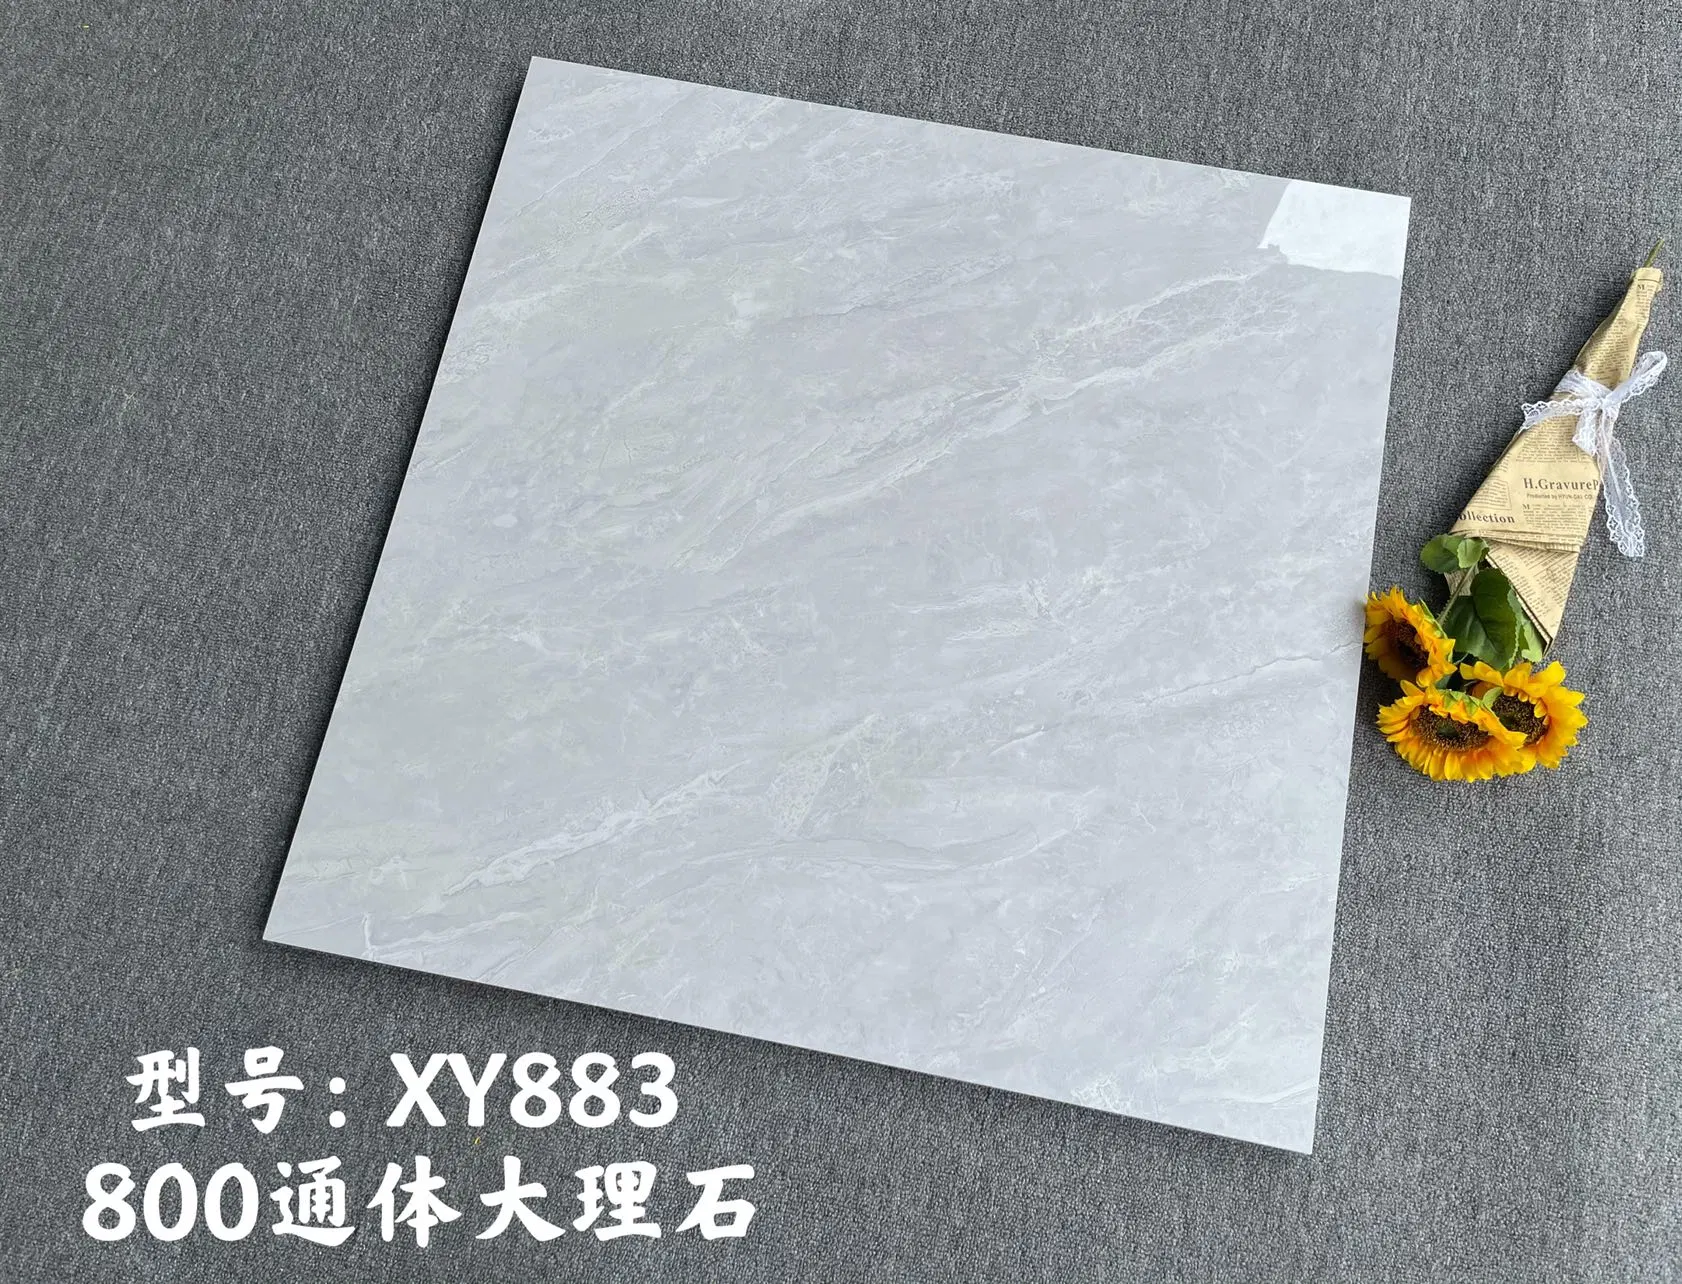 China Guangdong Ceramic Marble Floor Tile Living Room Modern Gray Floor Tile 800*800 Bedroom Brick Marble Tile Non-Slip Marble